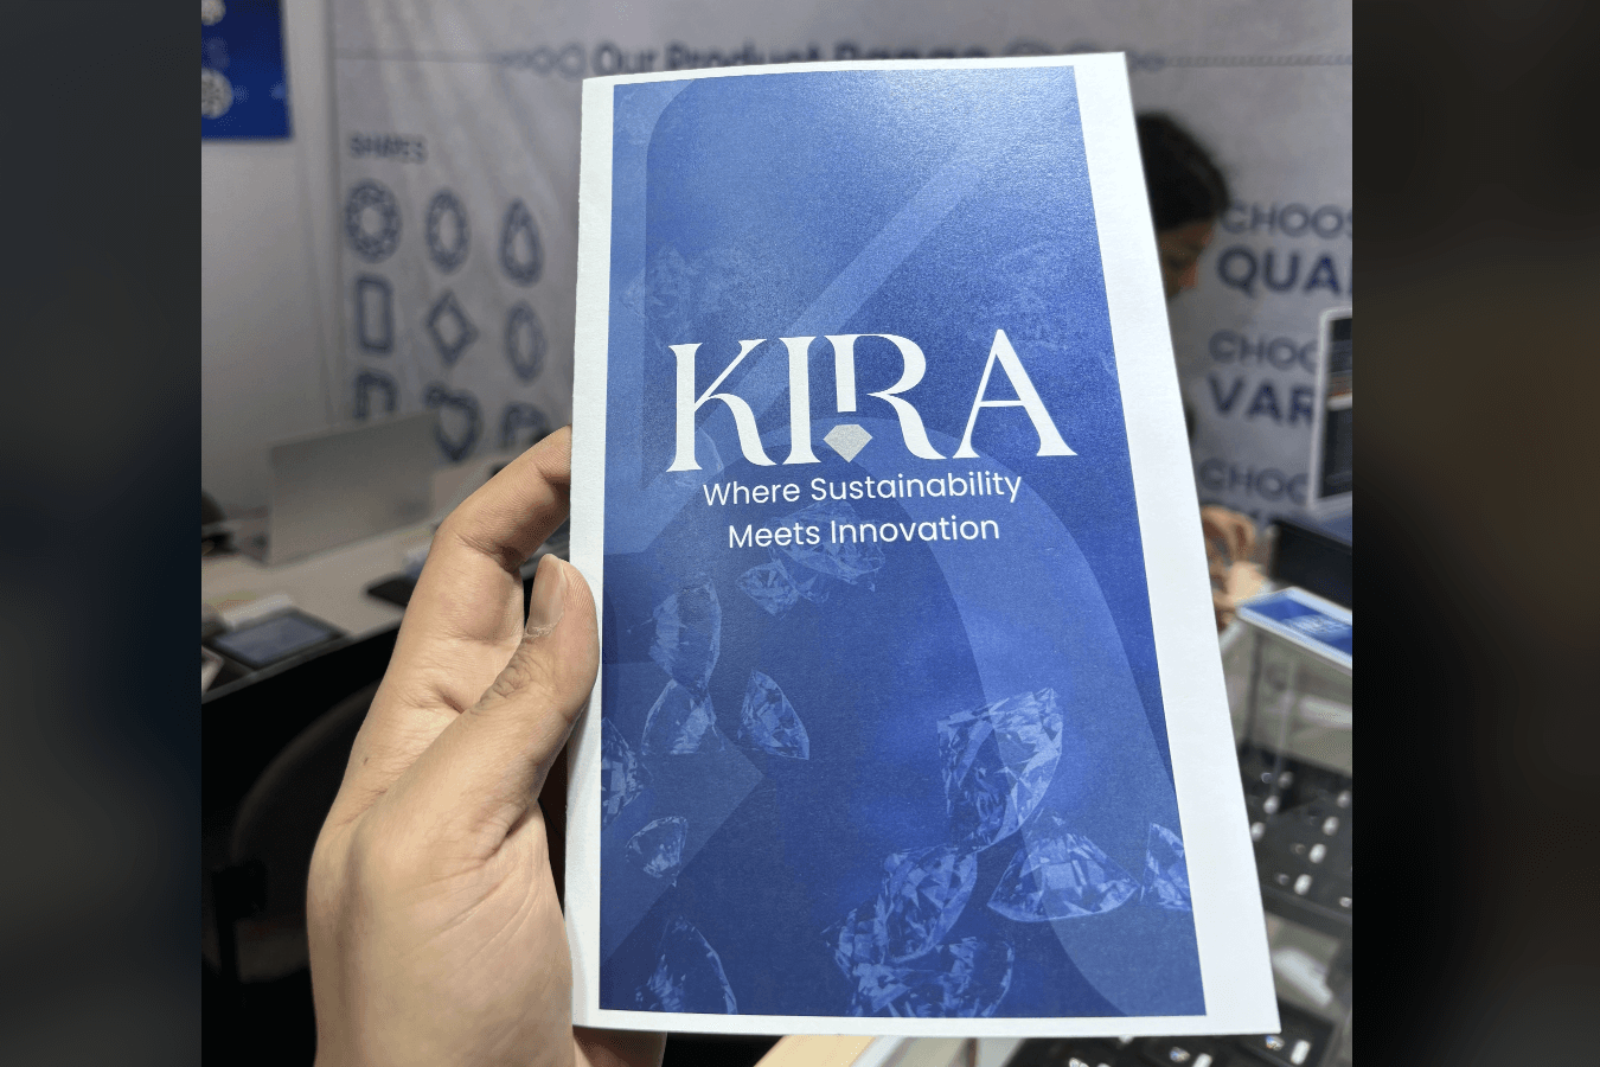 Kira Flyer In a Hand